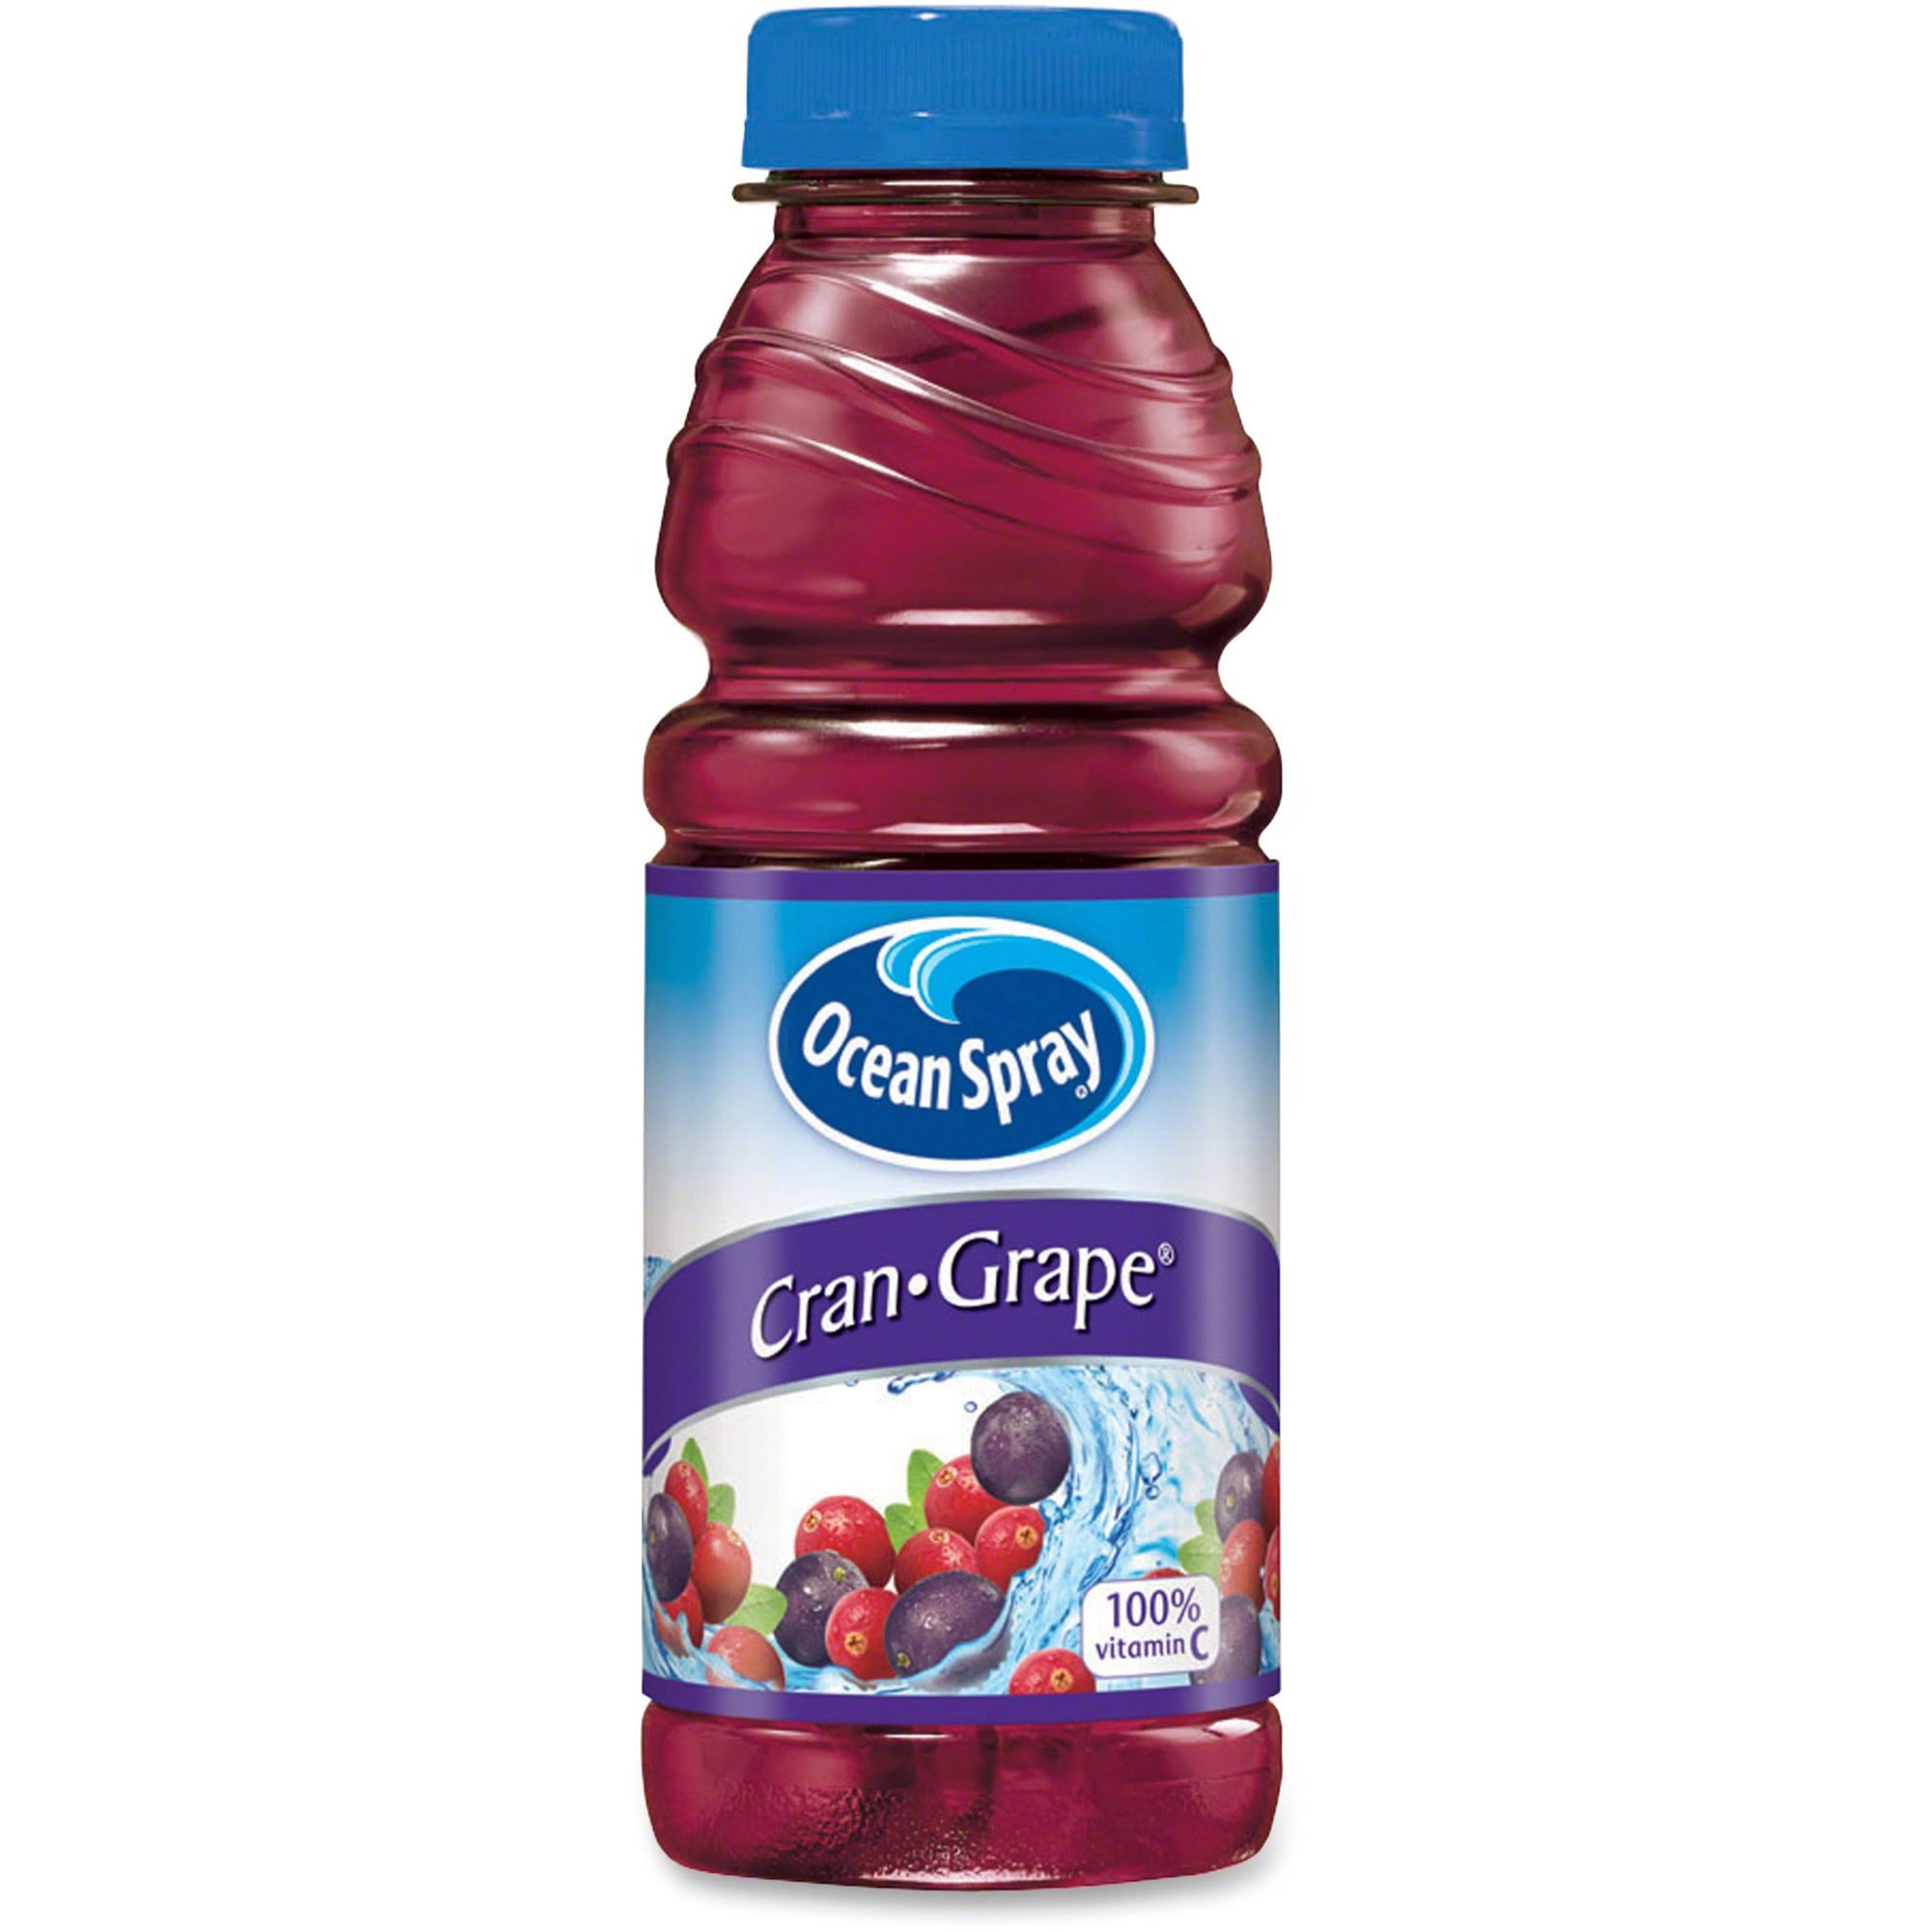 Ocean Spray Juice Cocktail, Cran-Grape - 15.2 fl oz